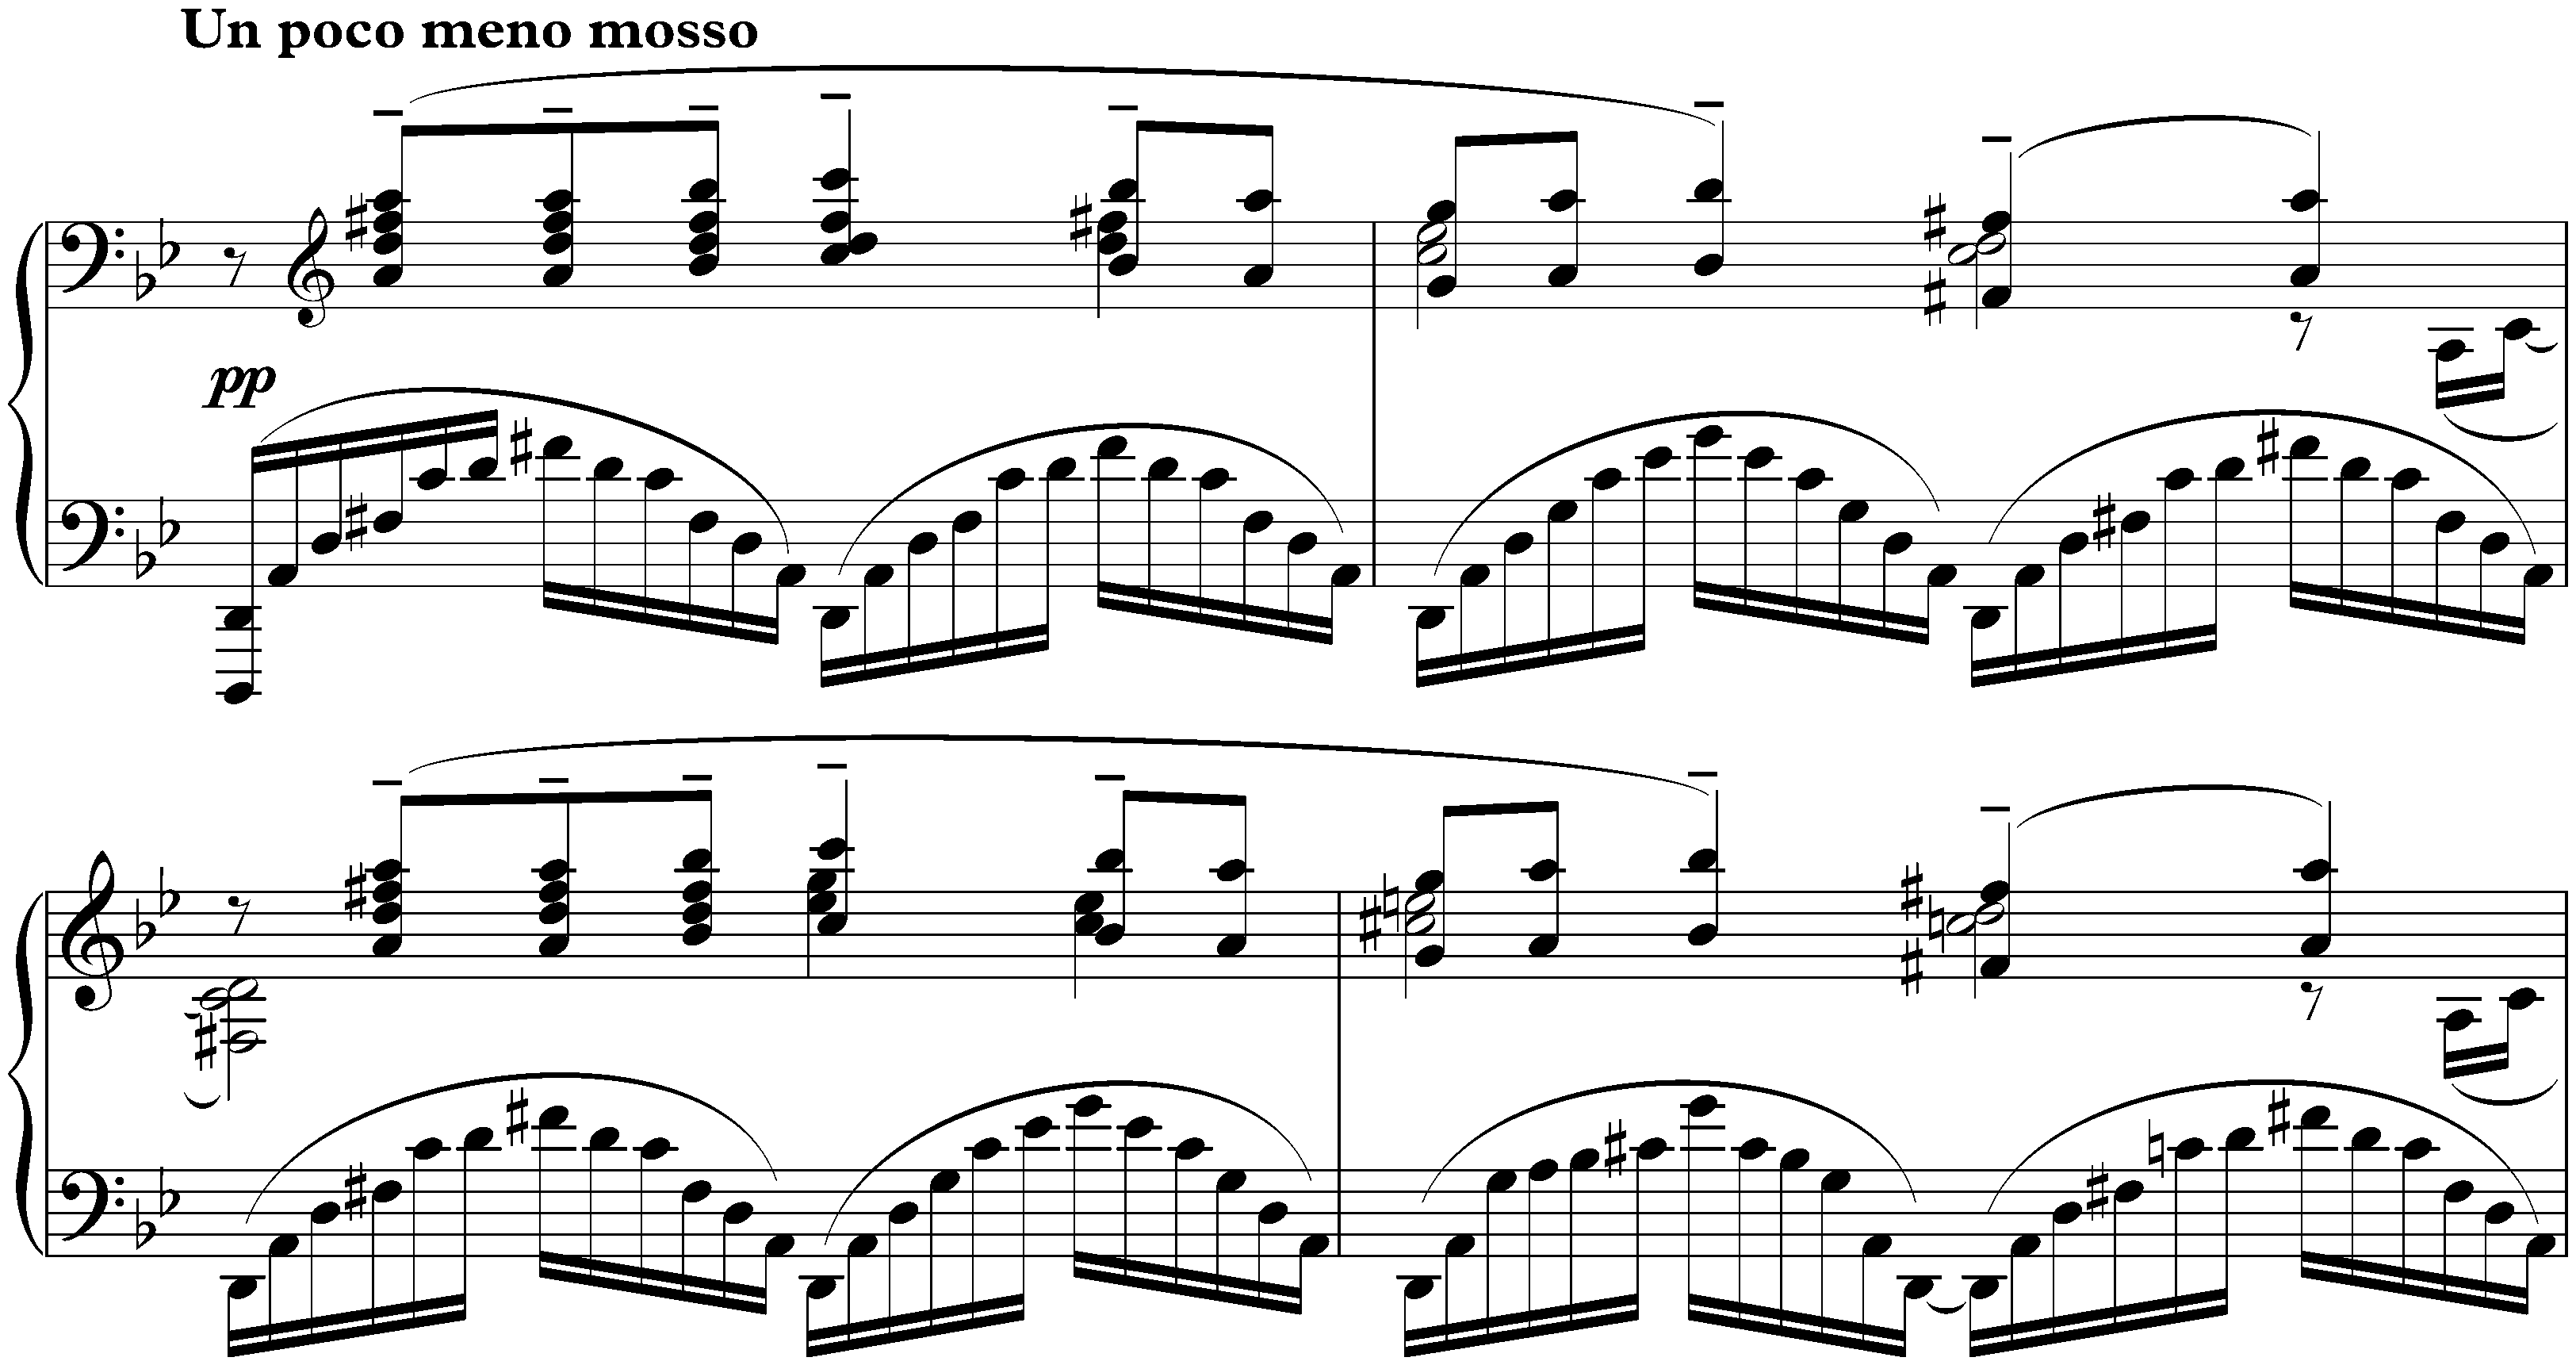 Préludes, op. 23; 5. G minor